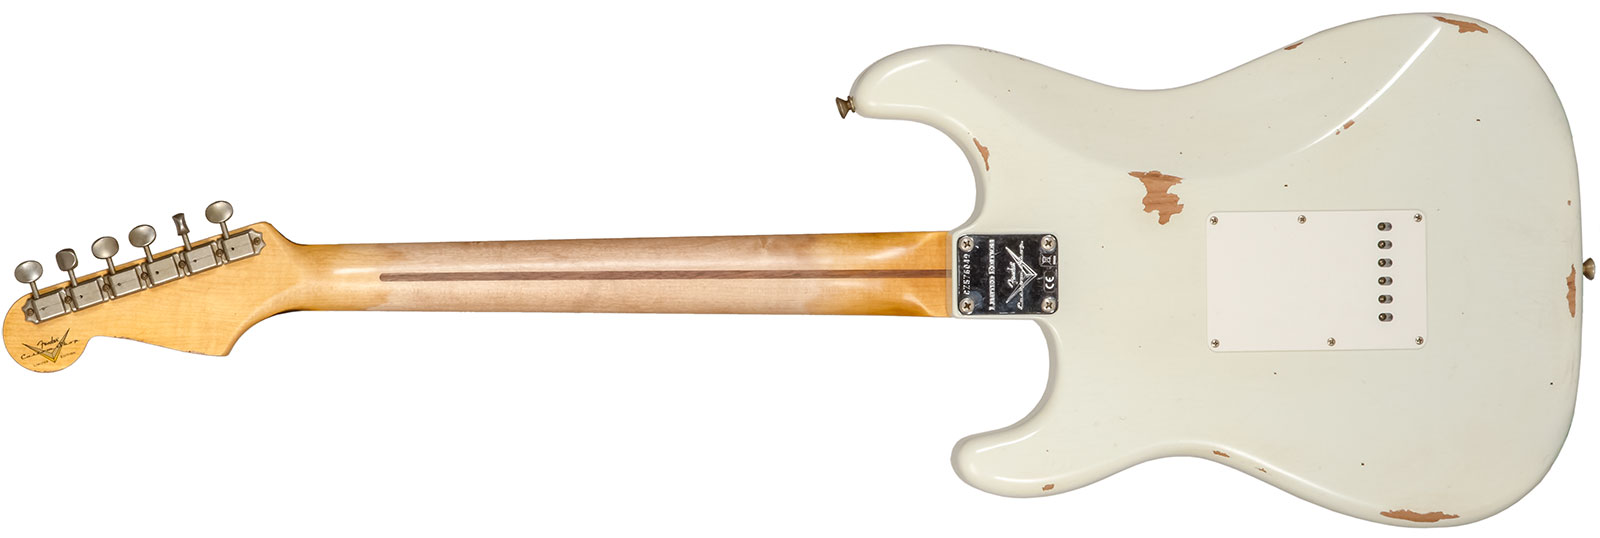 Fender Custom Shop Strat Fat 50's 3s Trem Mn #cz570495 - Relic India Ivory - Elektrische gitaar in Str-vorm - Variation 1